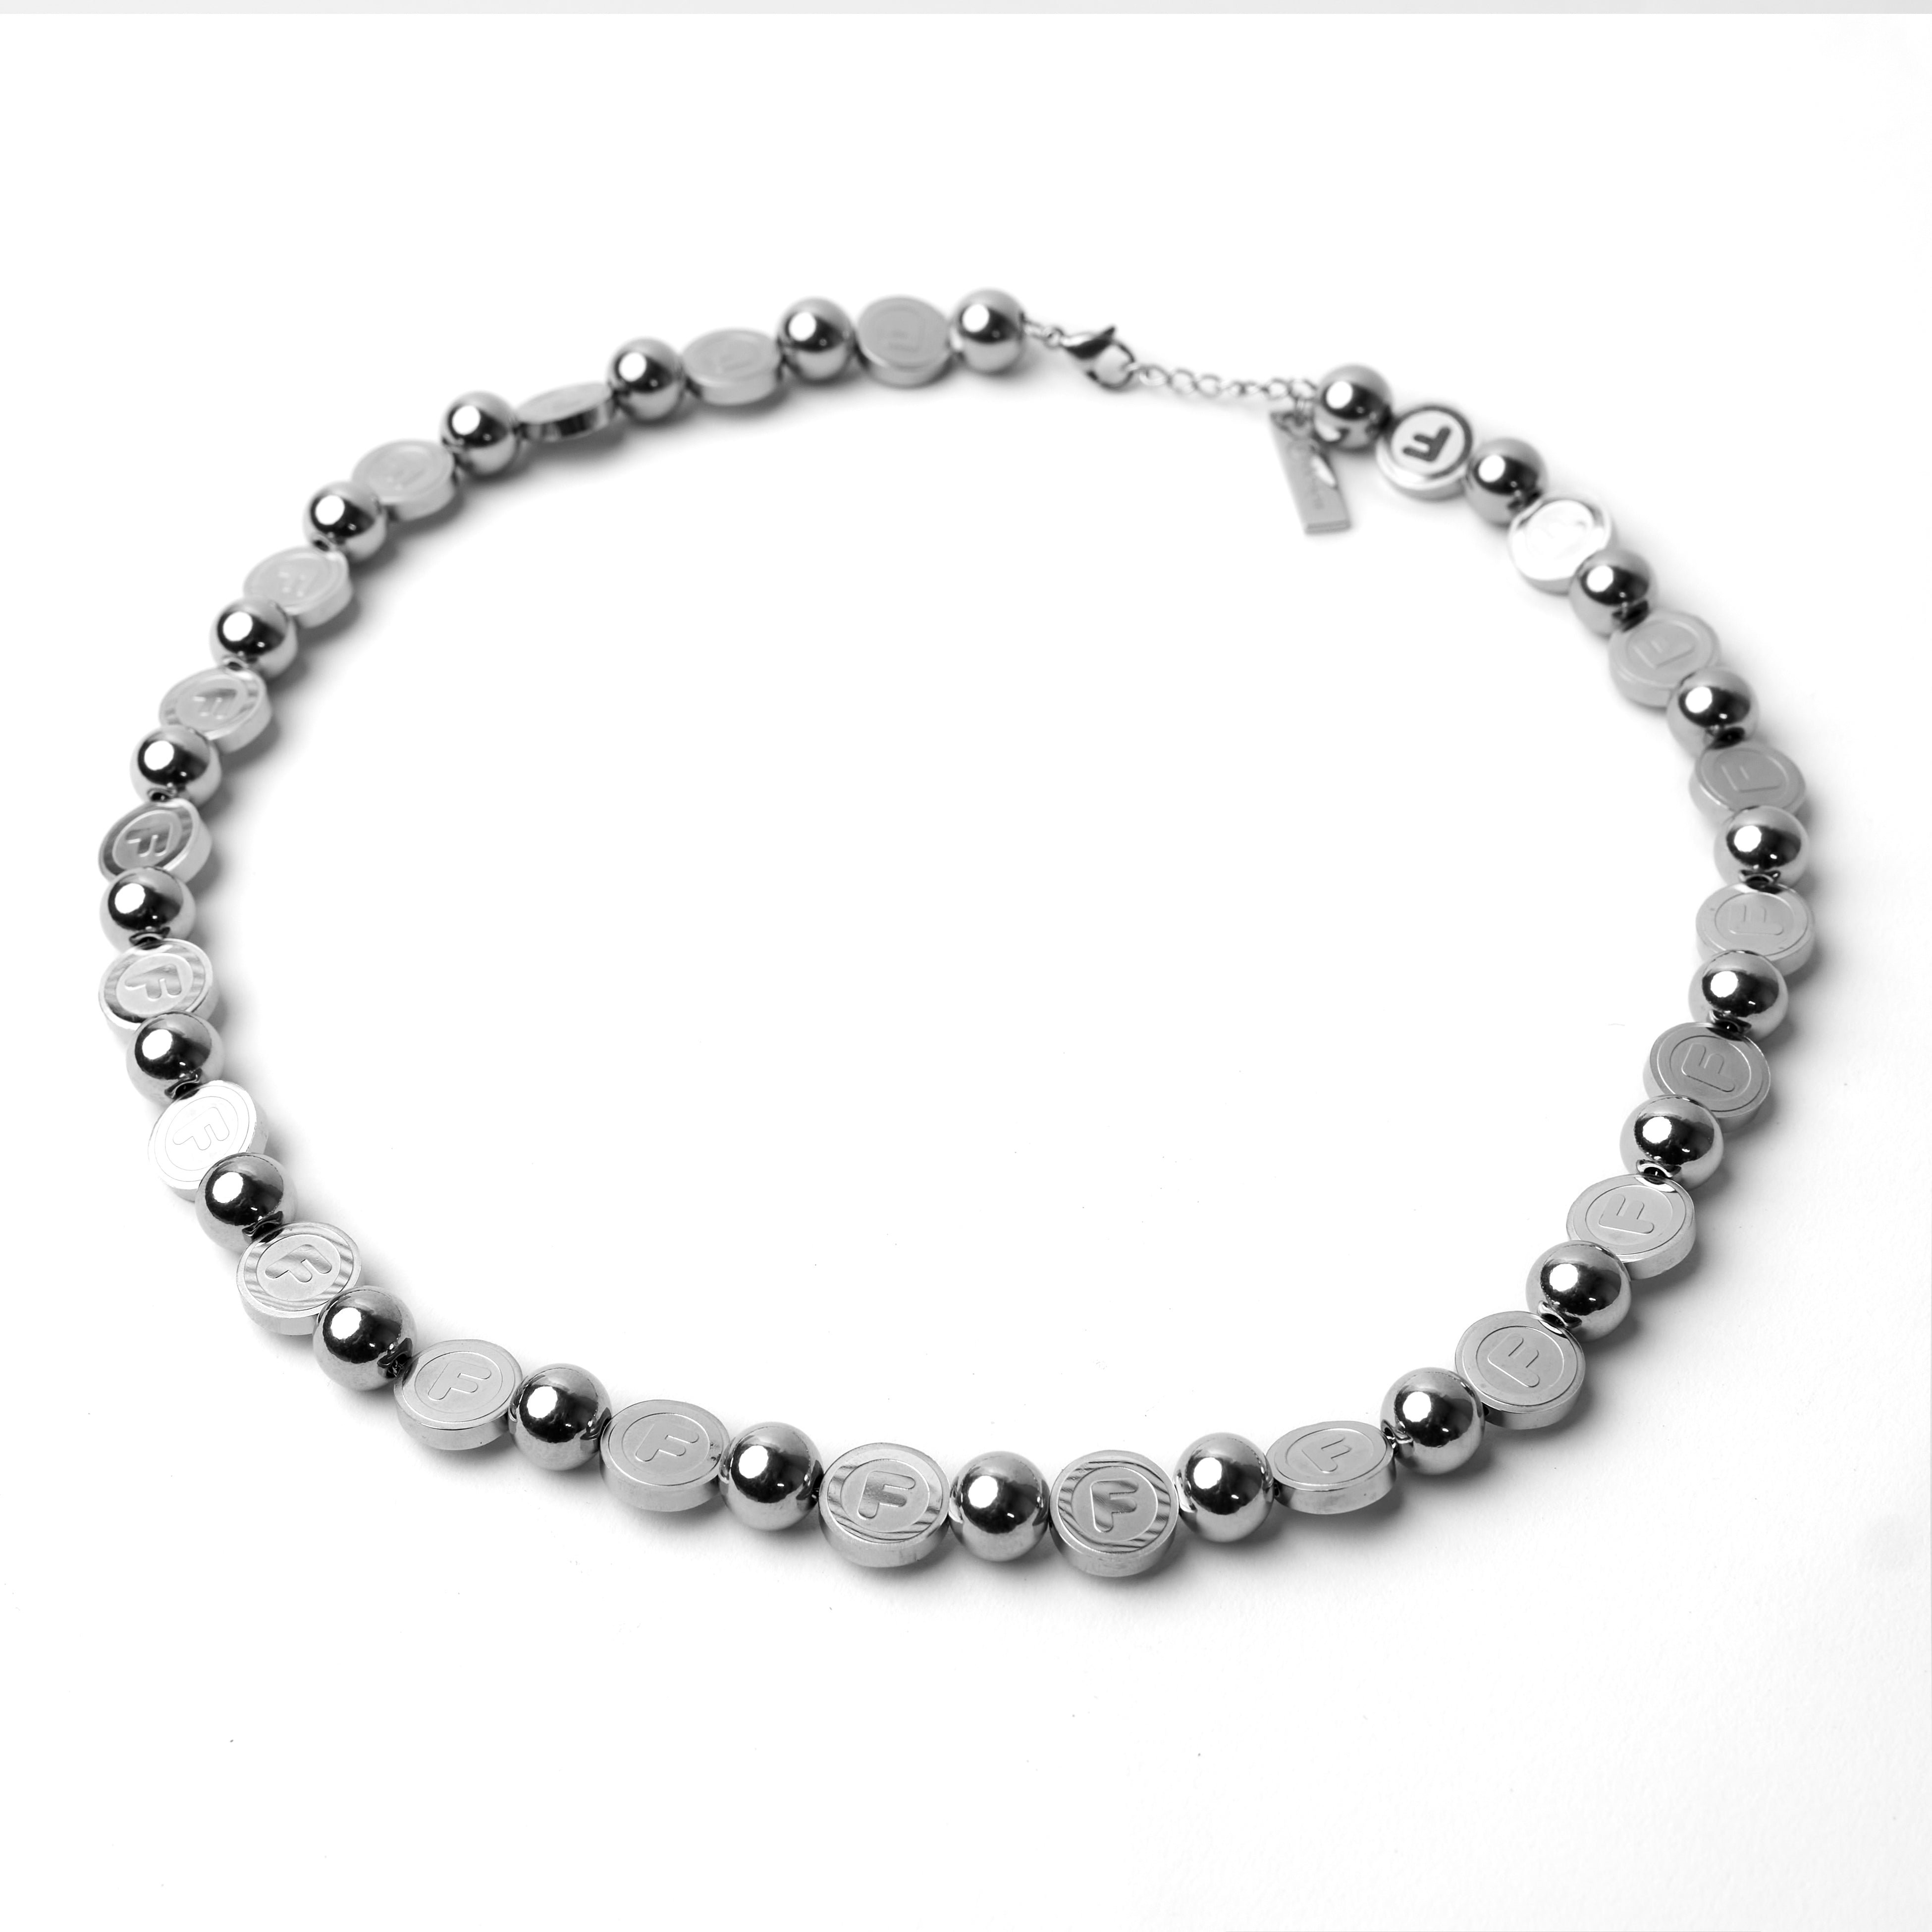 OriginalFani®design Fan-dana™ Necklace (Silver)